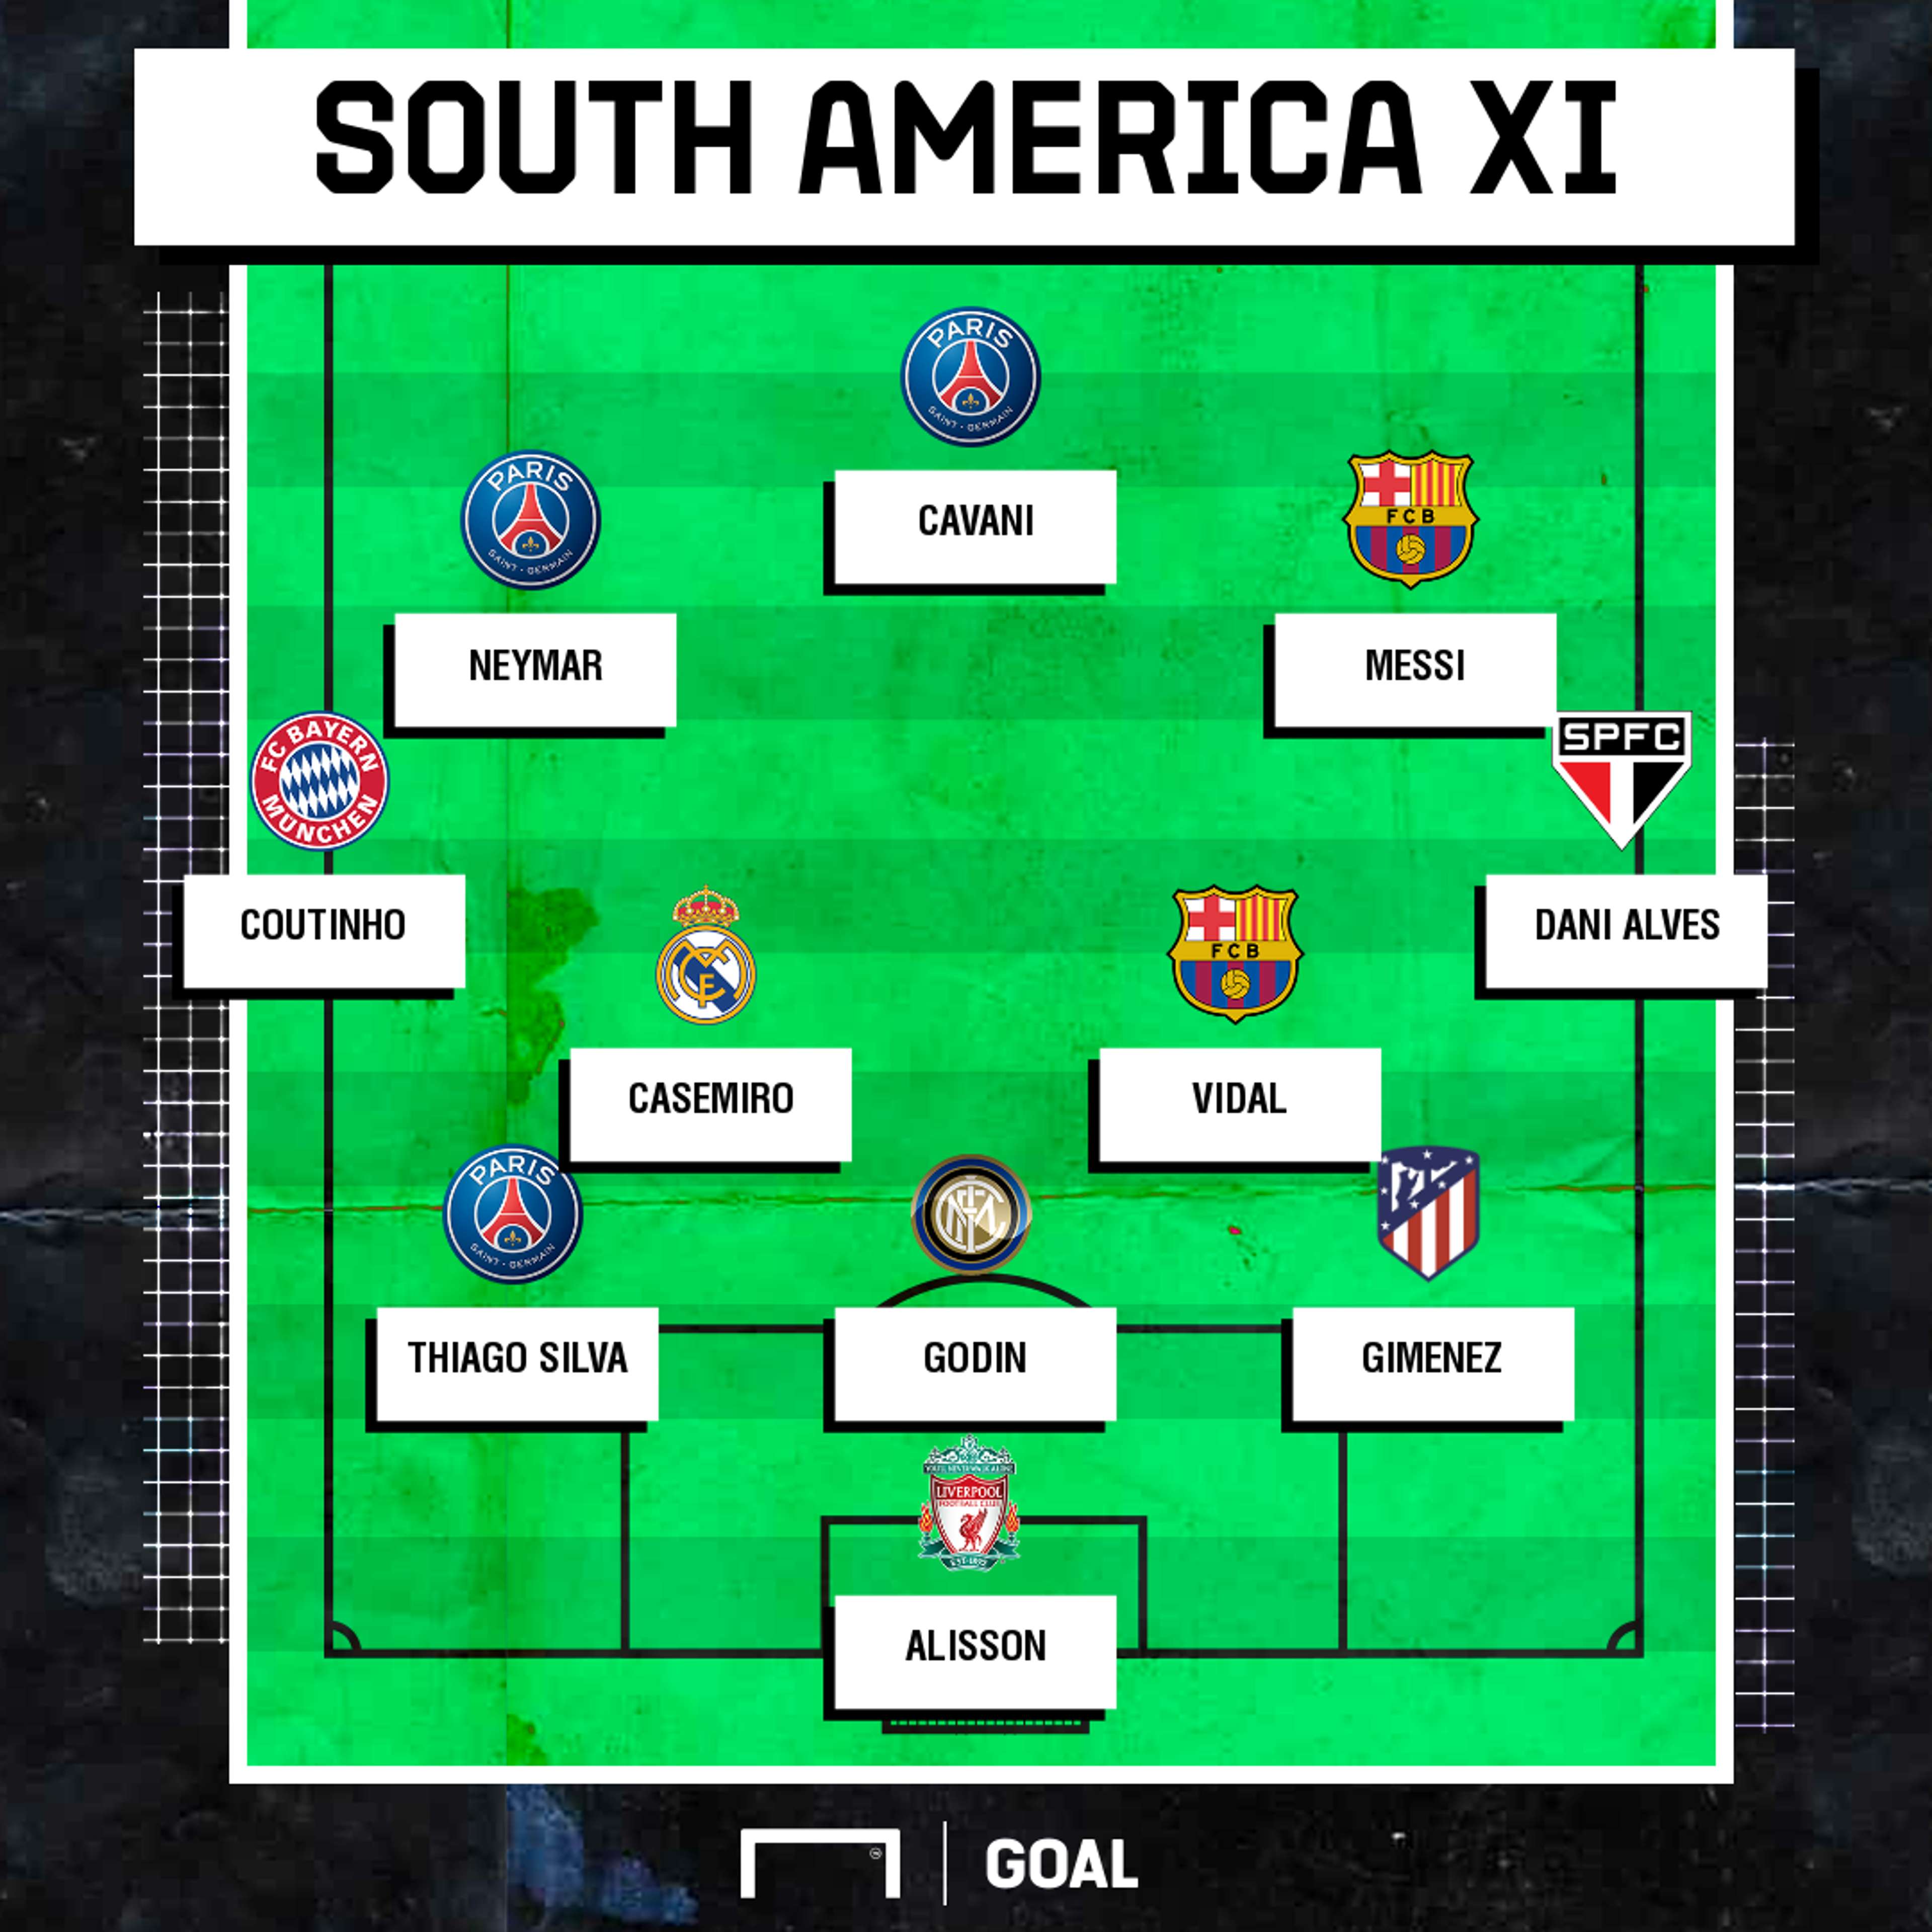 Europe vs South America PS